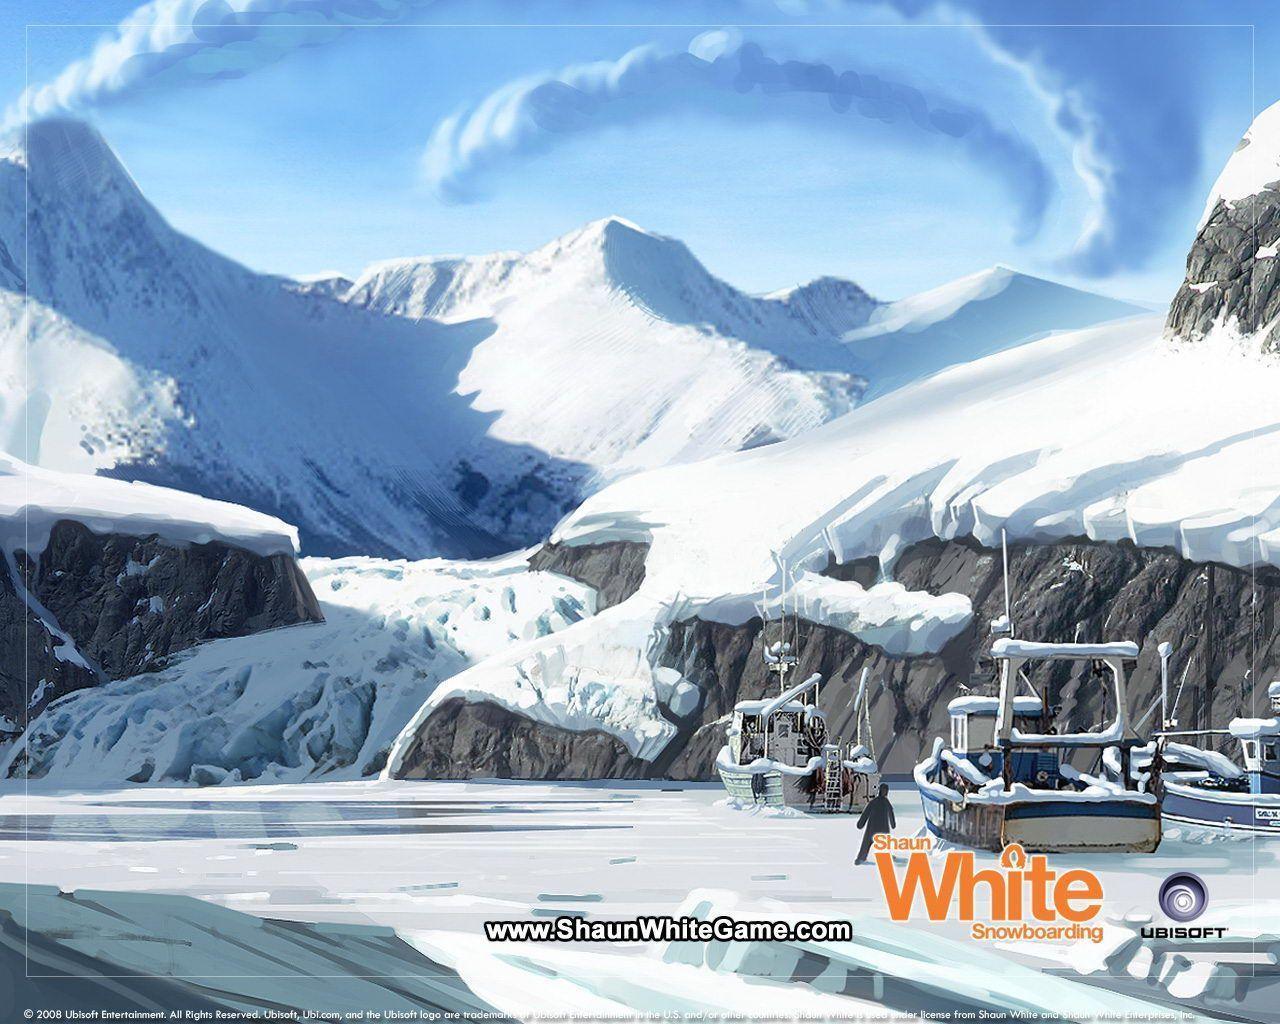 Shaun White Snowboarding Wallpaper. HCL